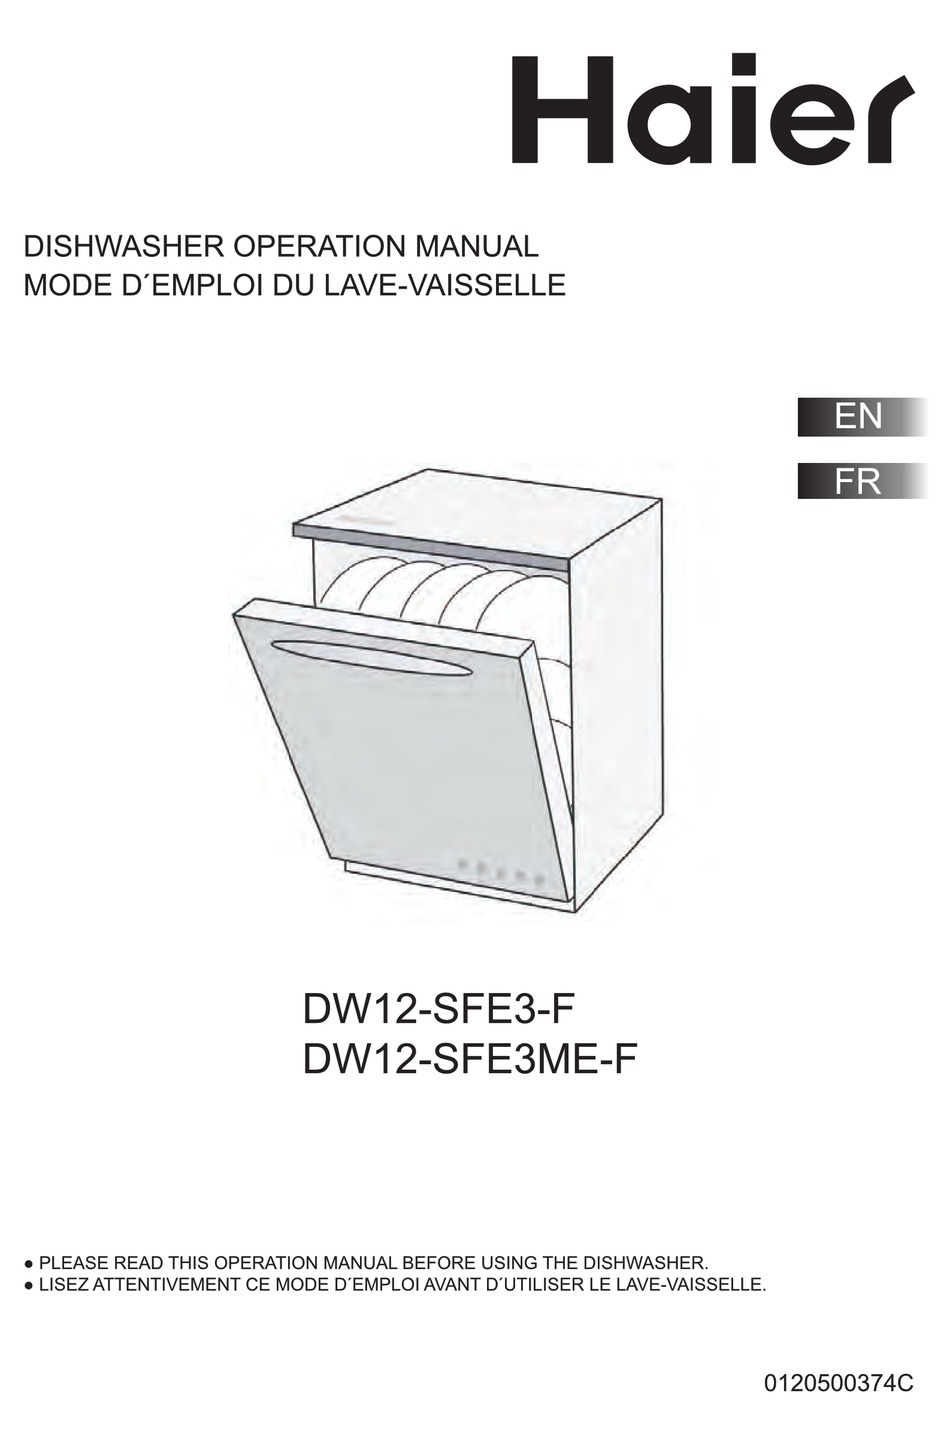 DW12-SFE3-F